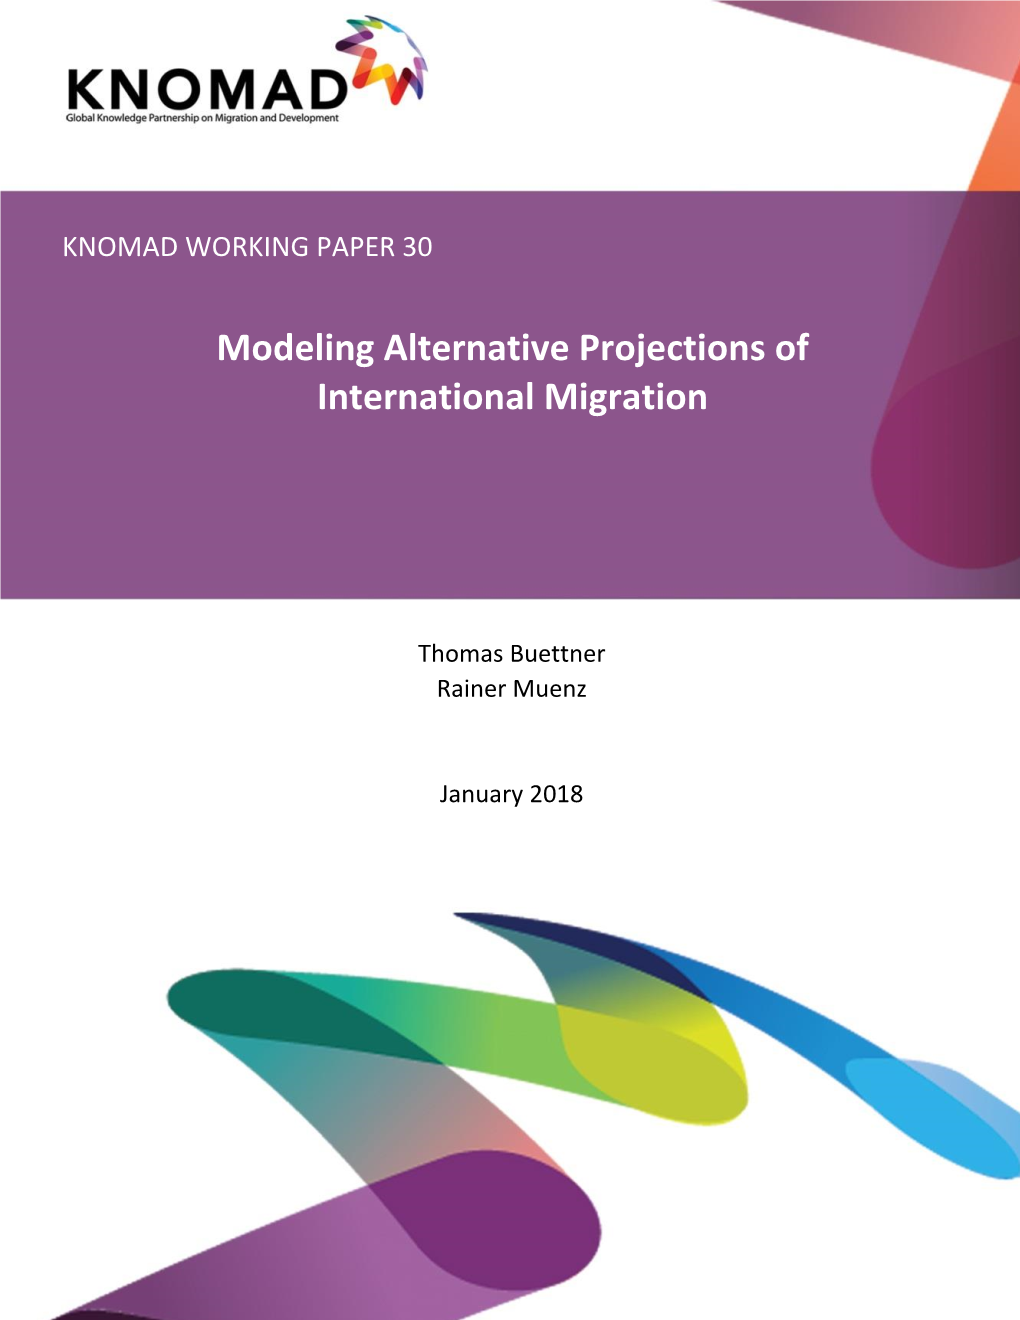 Modeling Alternative Projections of International Migration